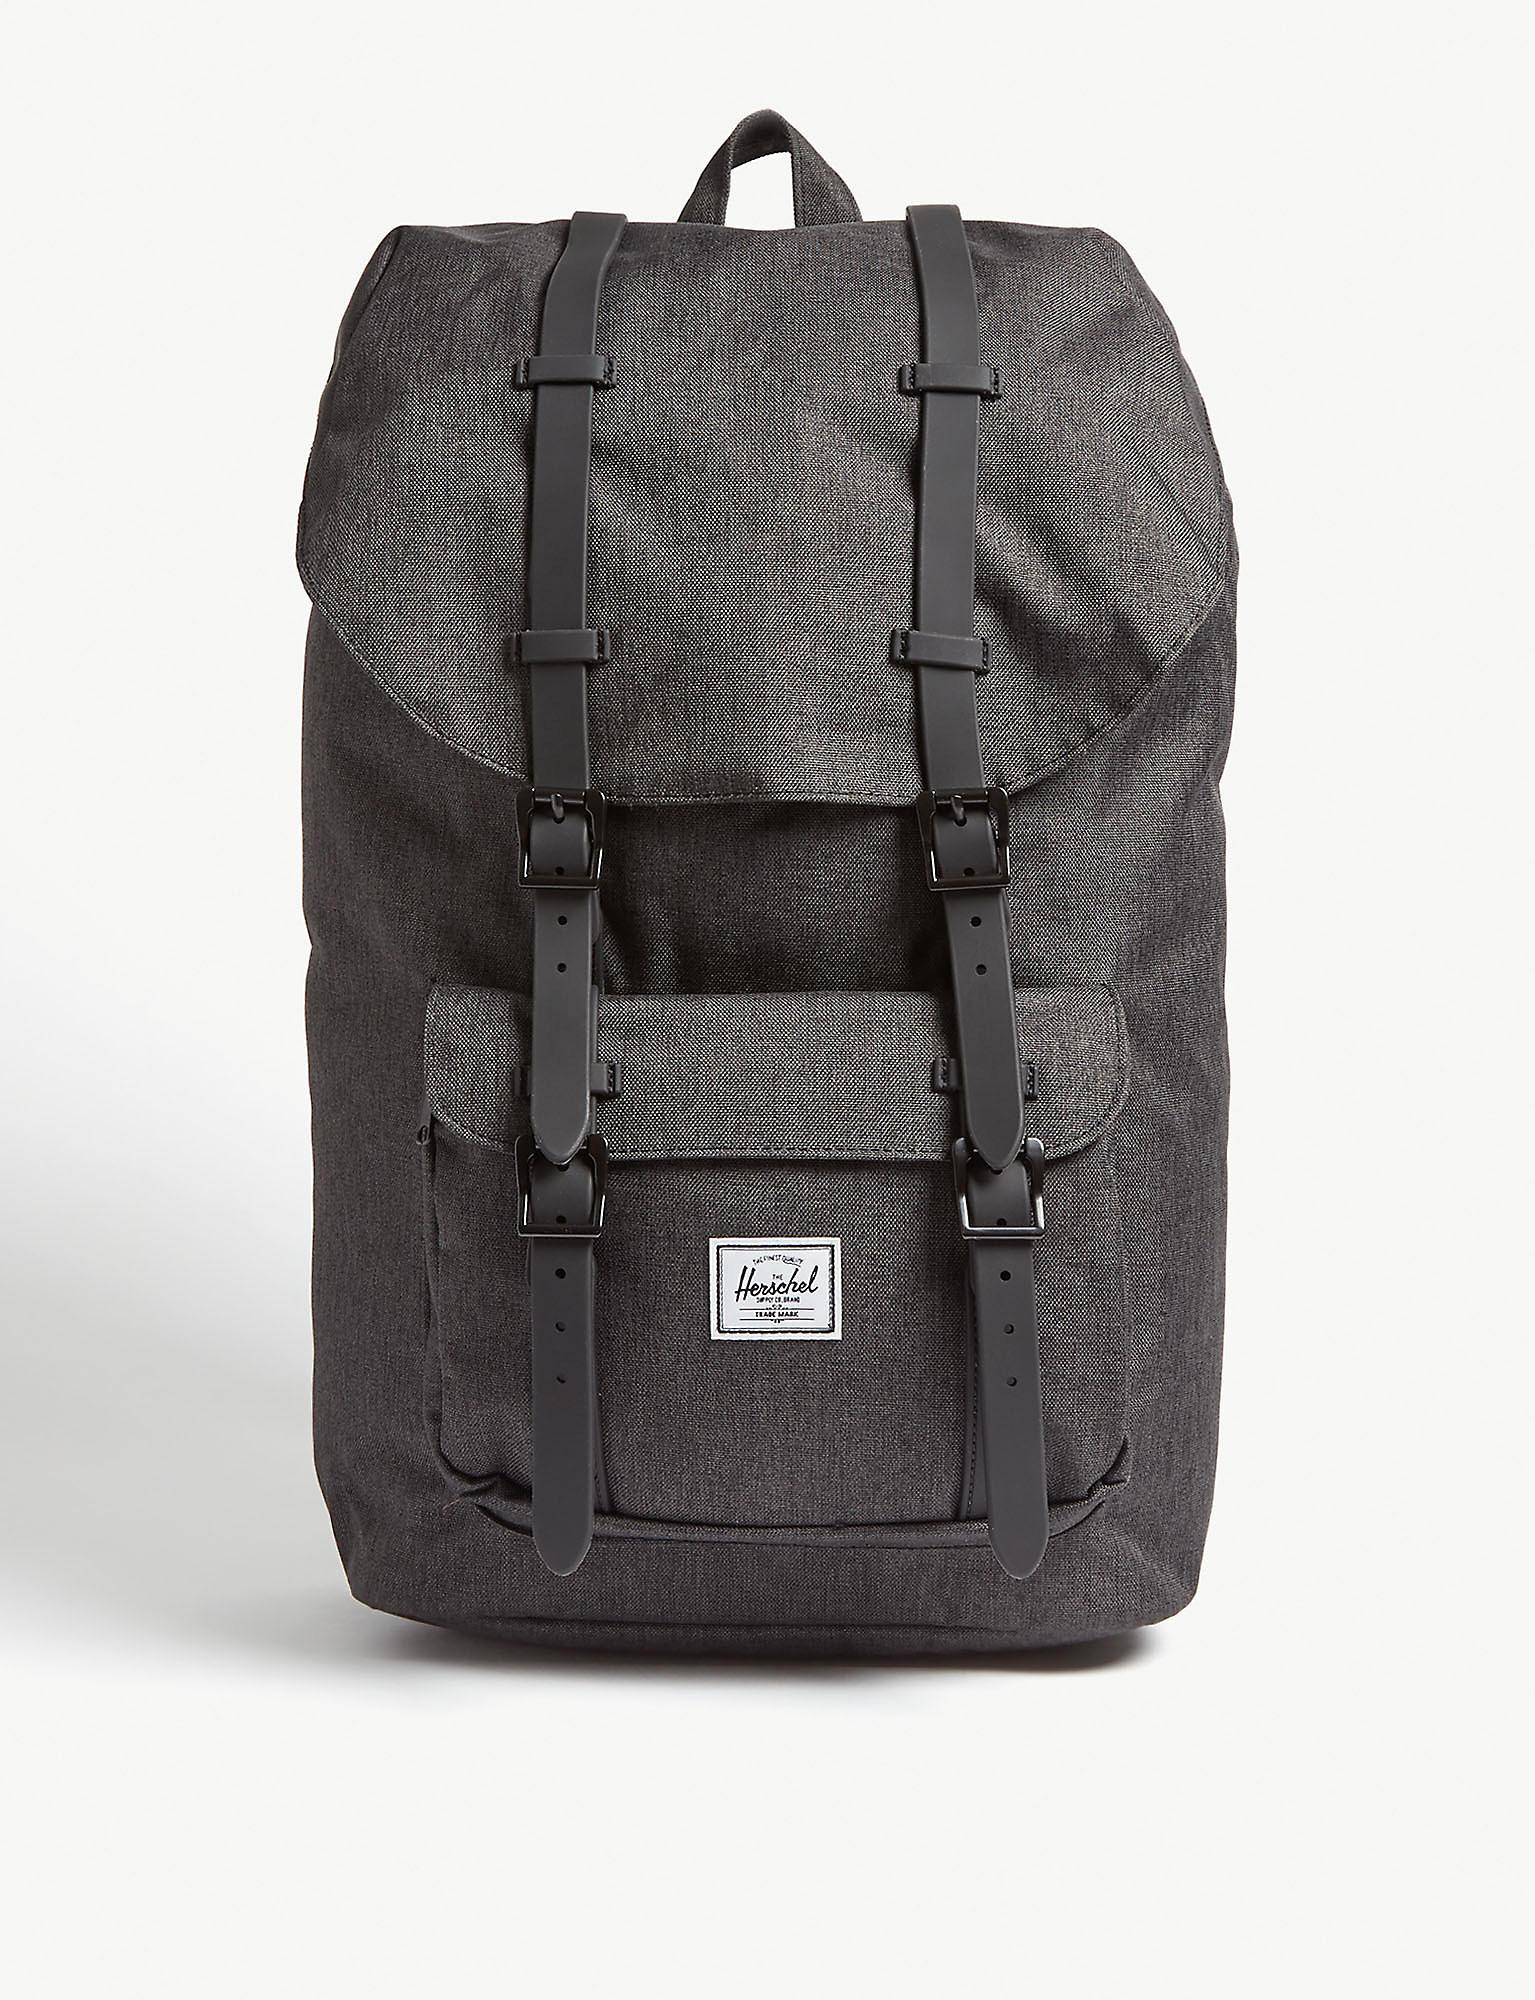 Herschel Supply Co. Little America Backpack in Black for Men - Lyst